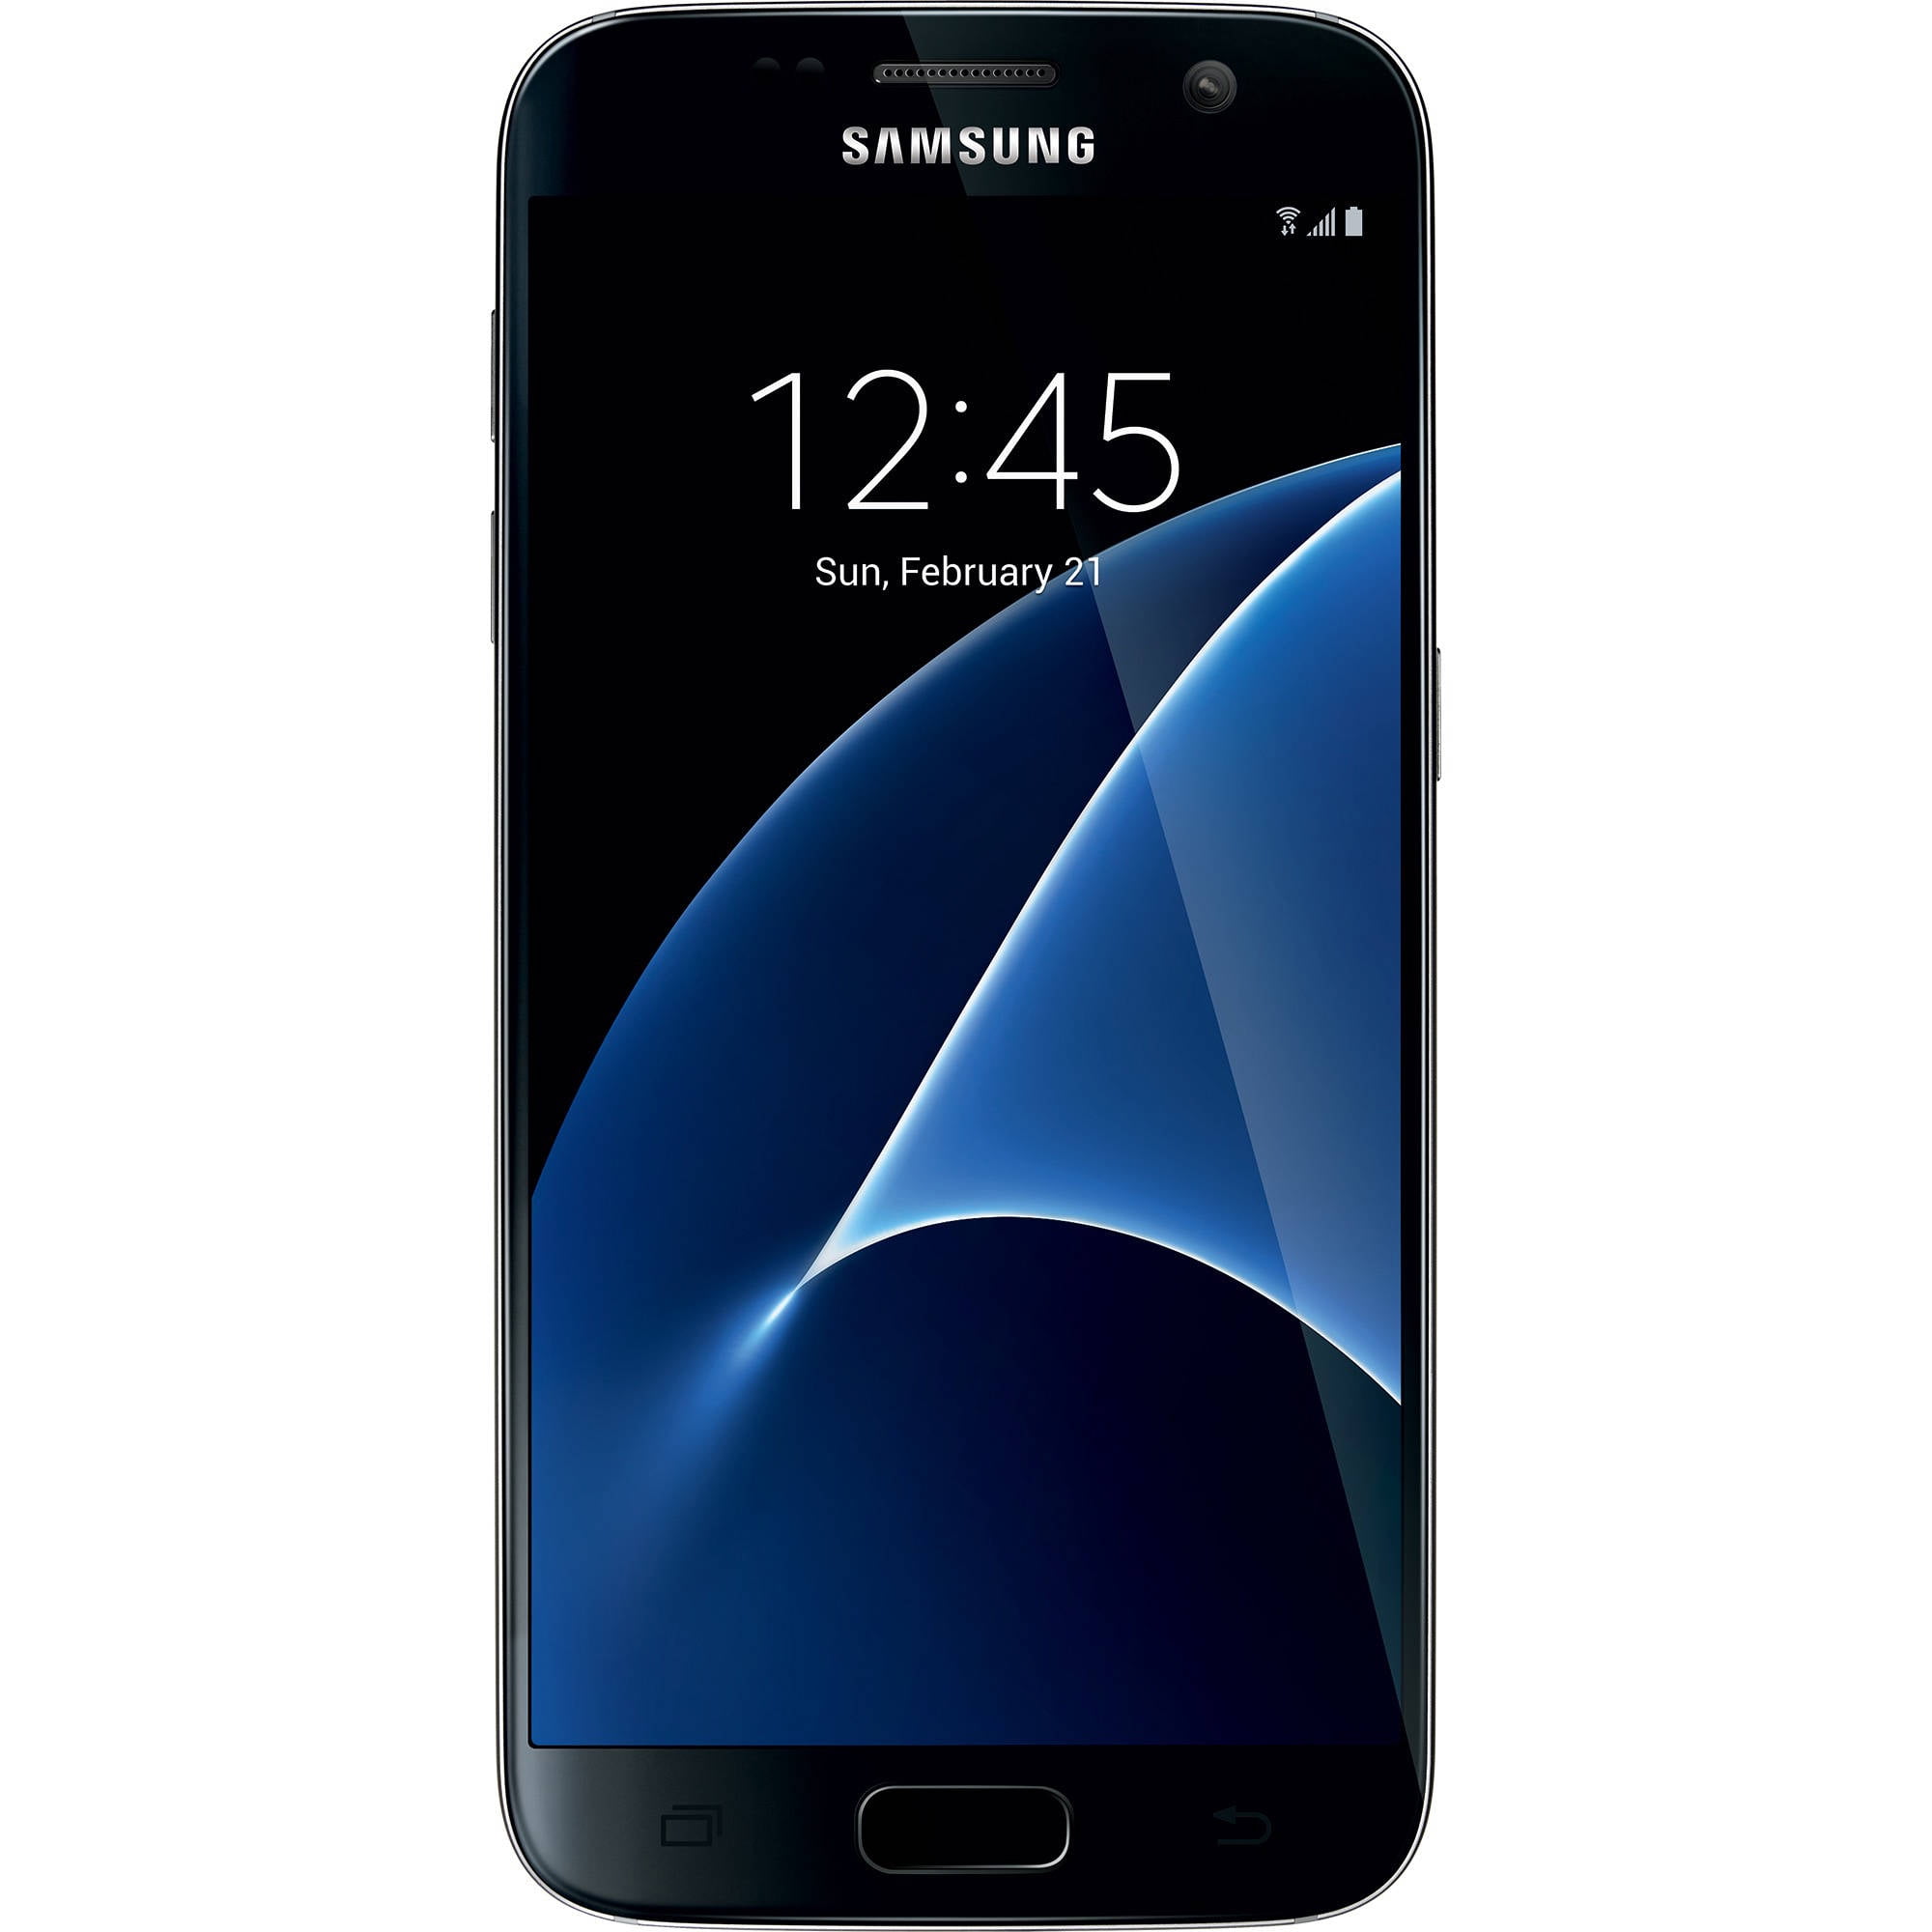 Total Wireless SAMSUNG Galaxy S7 4G LTE, 32GB Black - Smartphone - Walmart.com